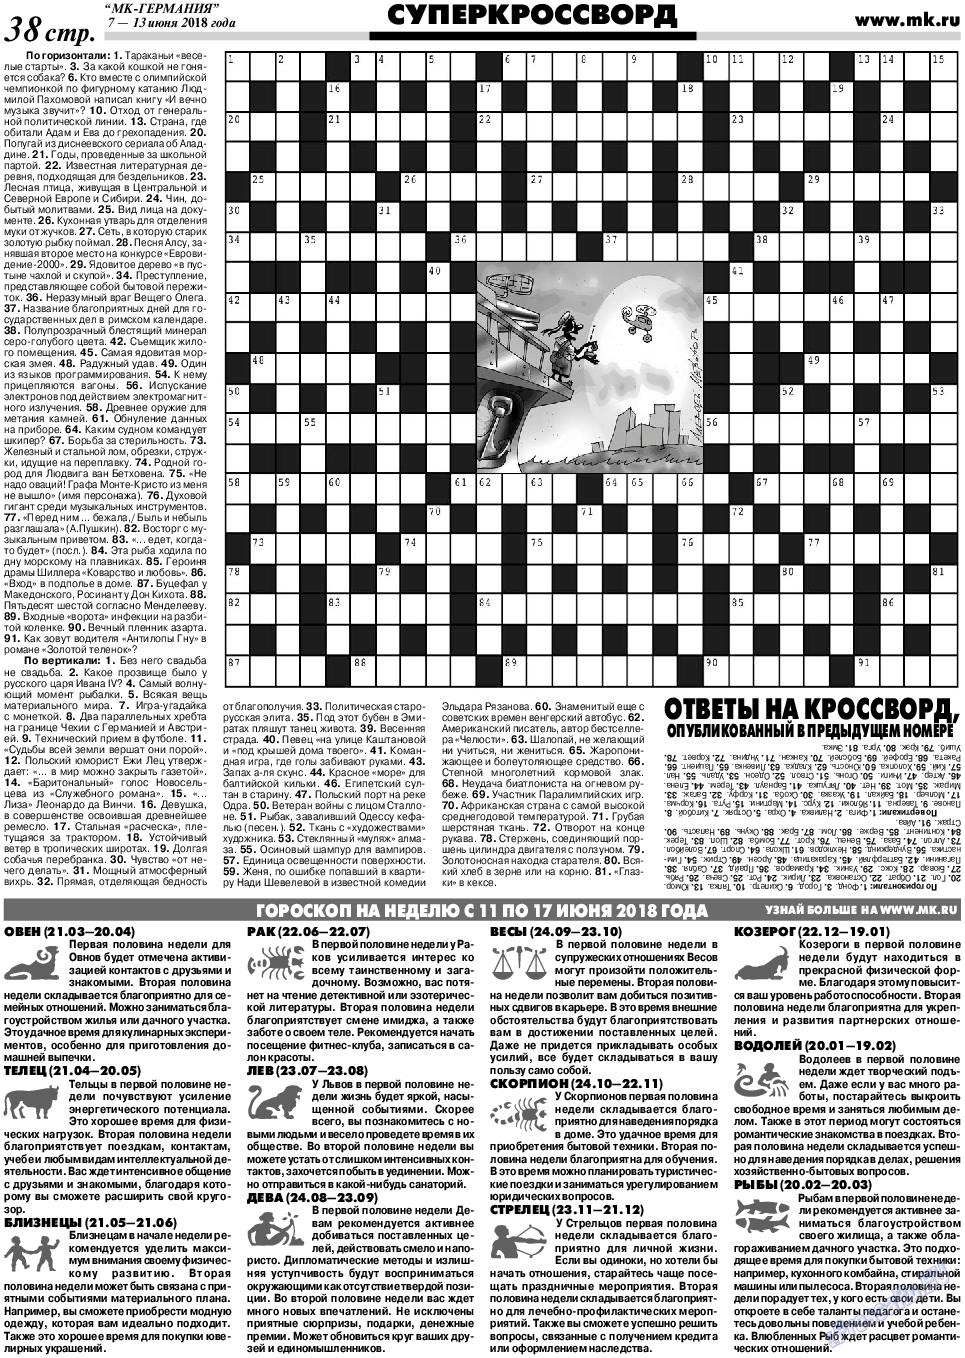 МК-Германия, газета. 2018 №24 стр.38